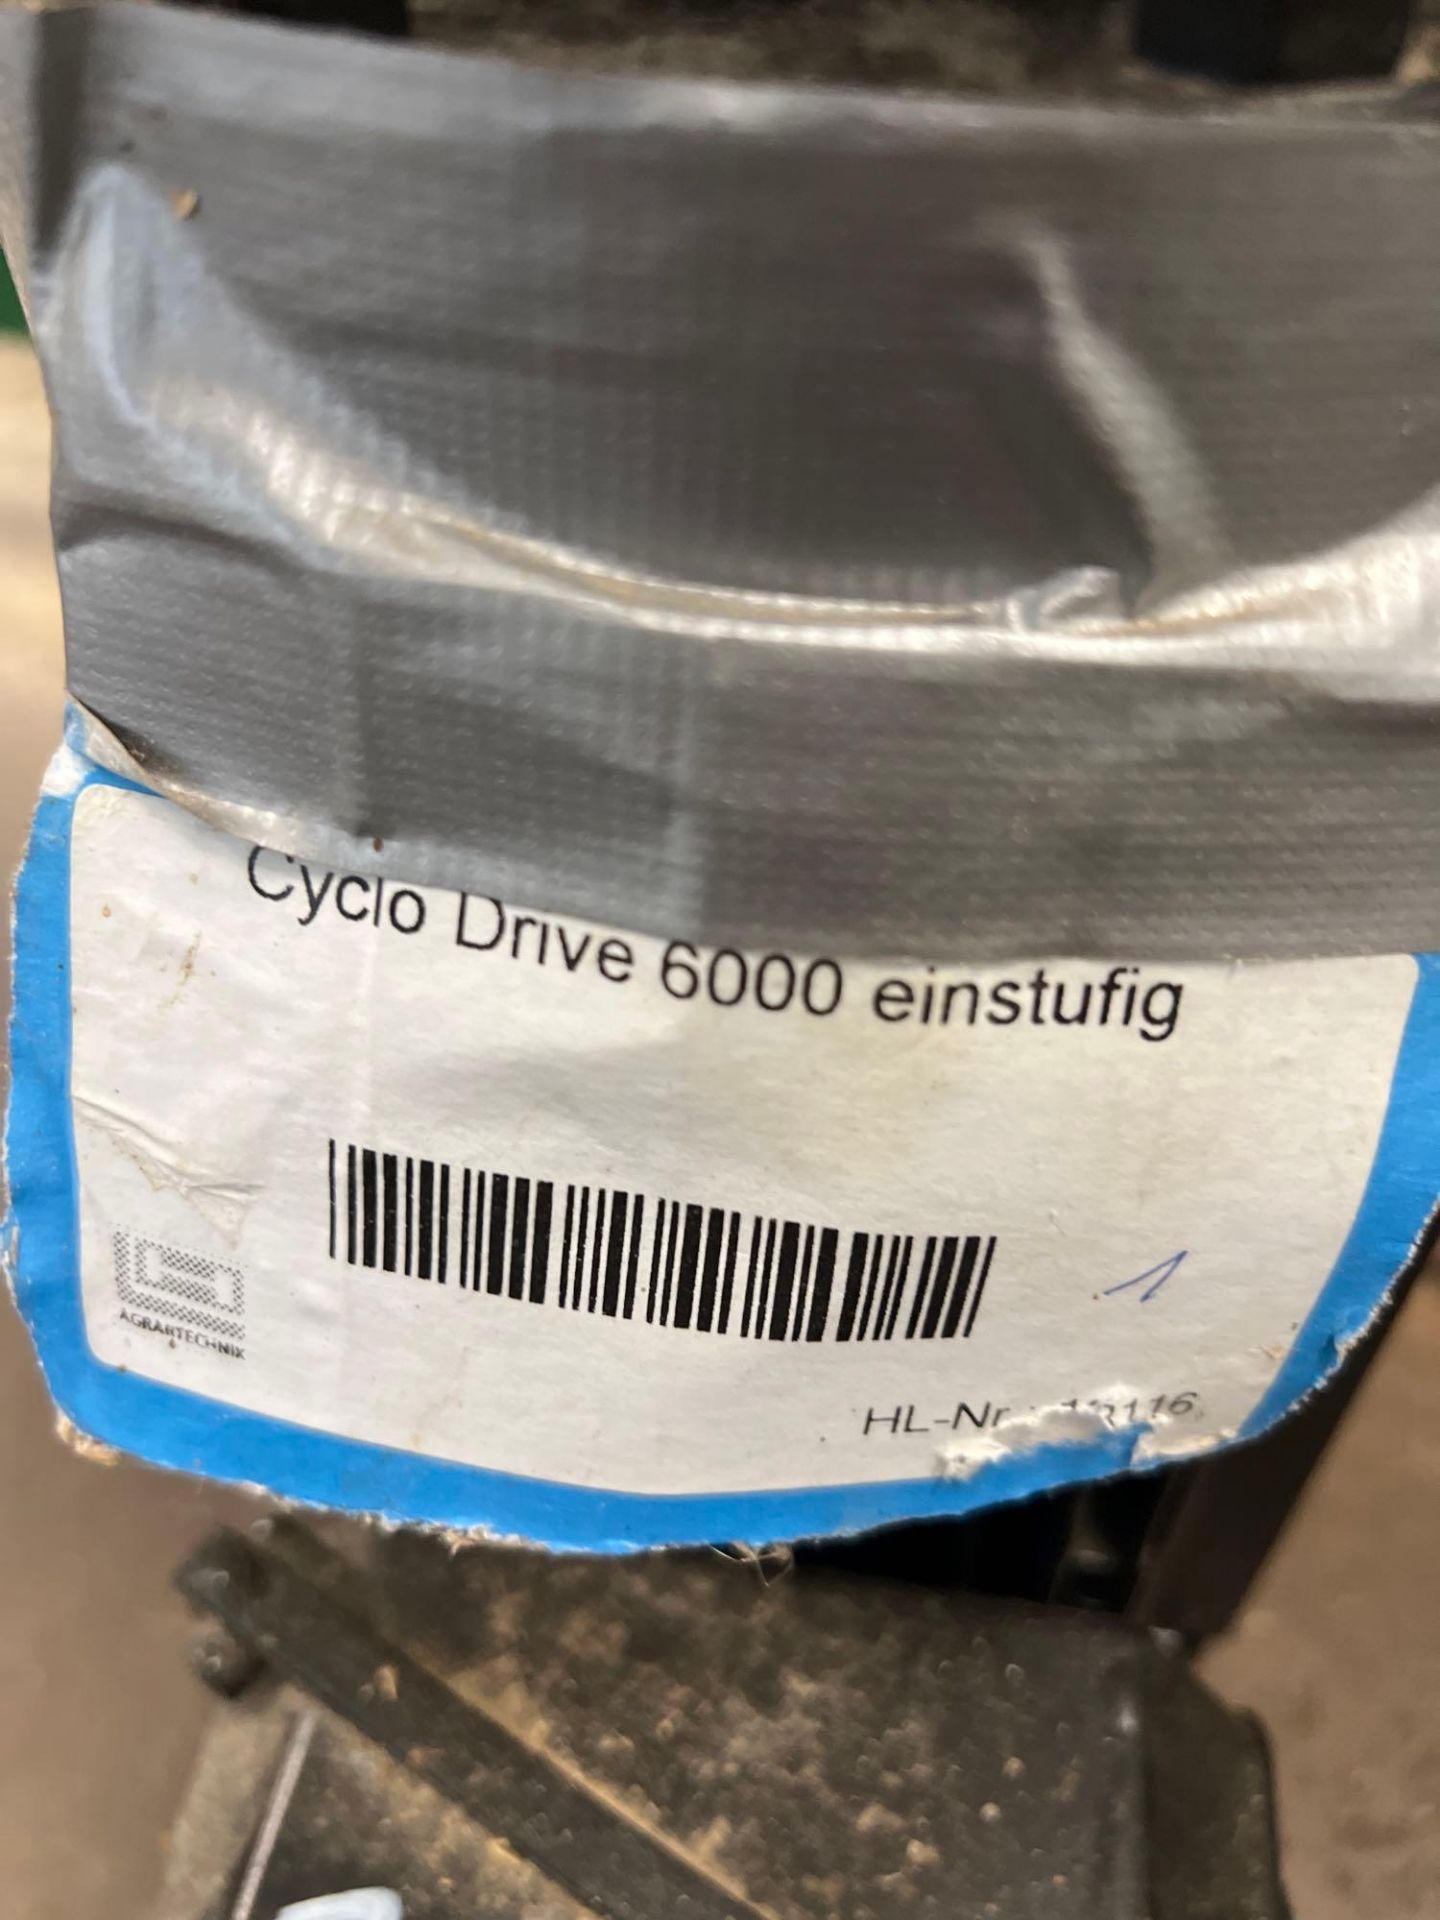 Cyclo drive 6000 - Image 2 of 2